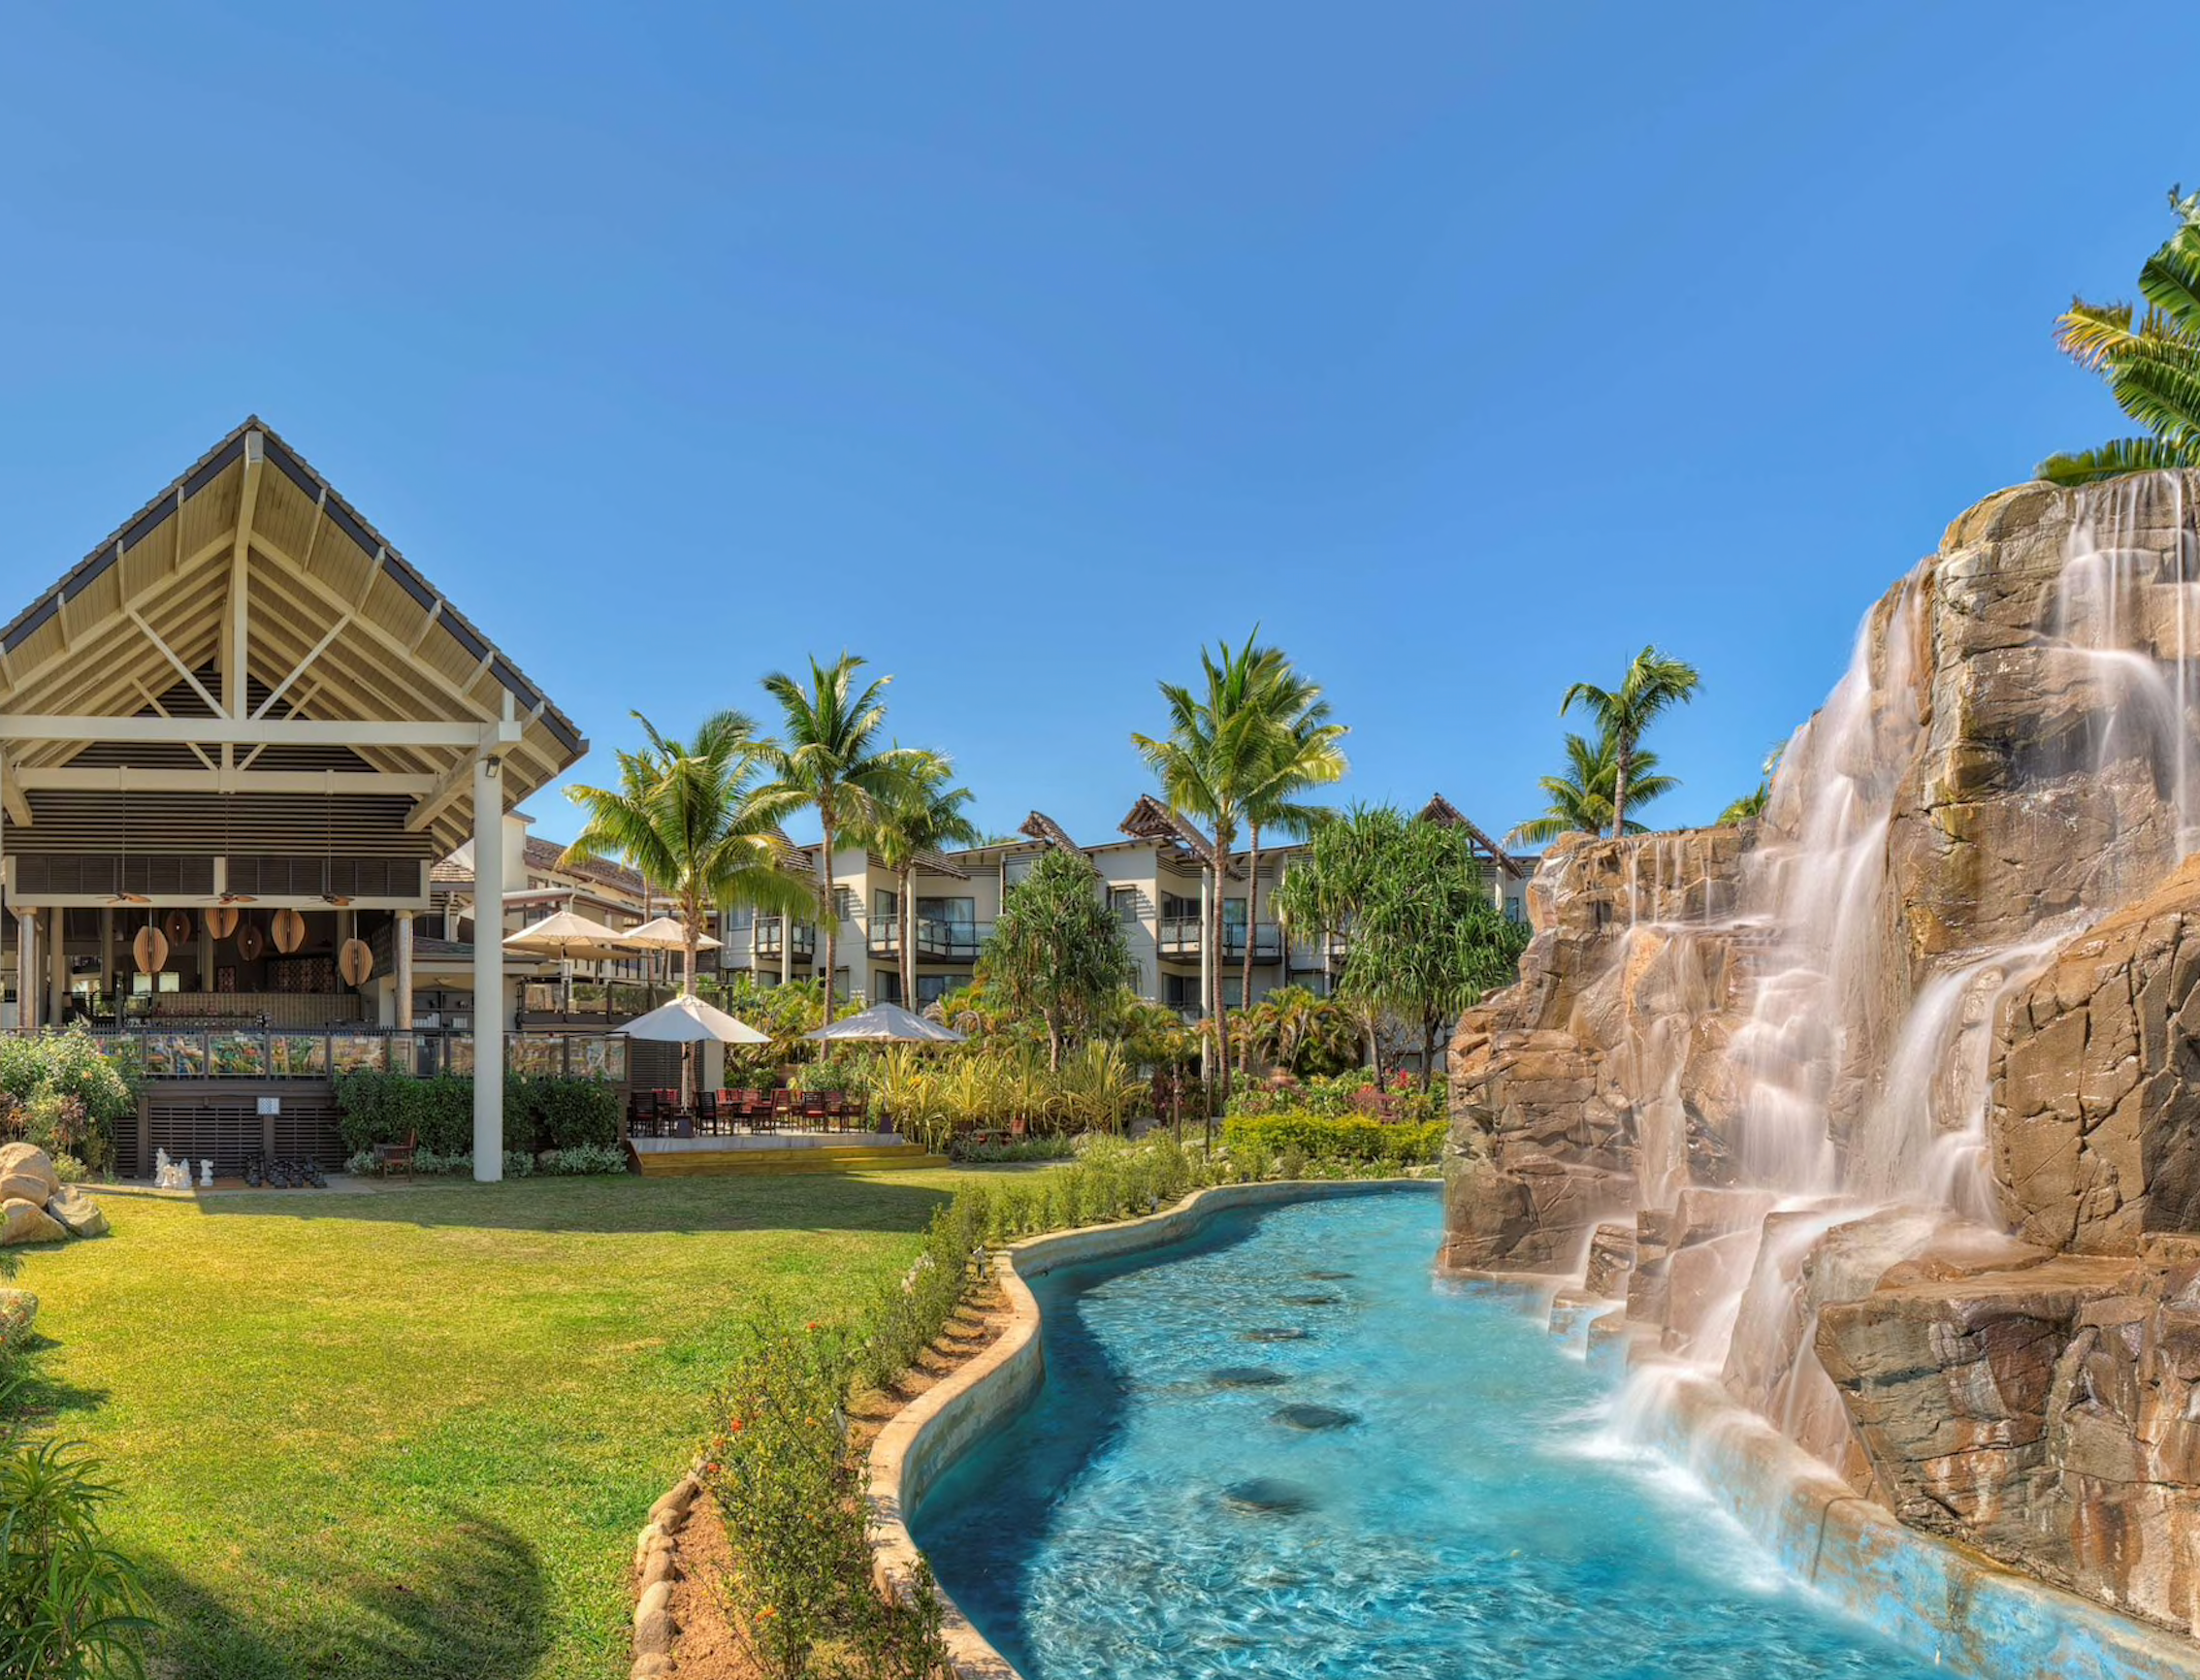 Radisson Fiji resort pool